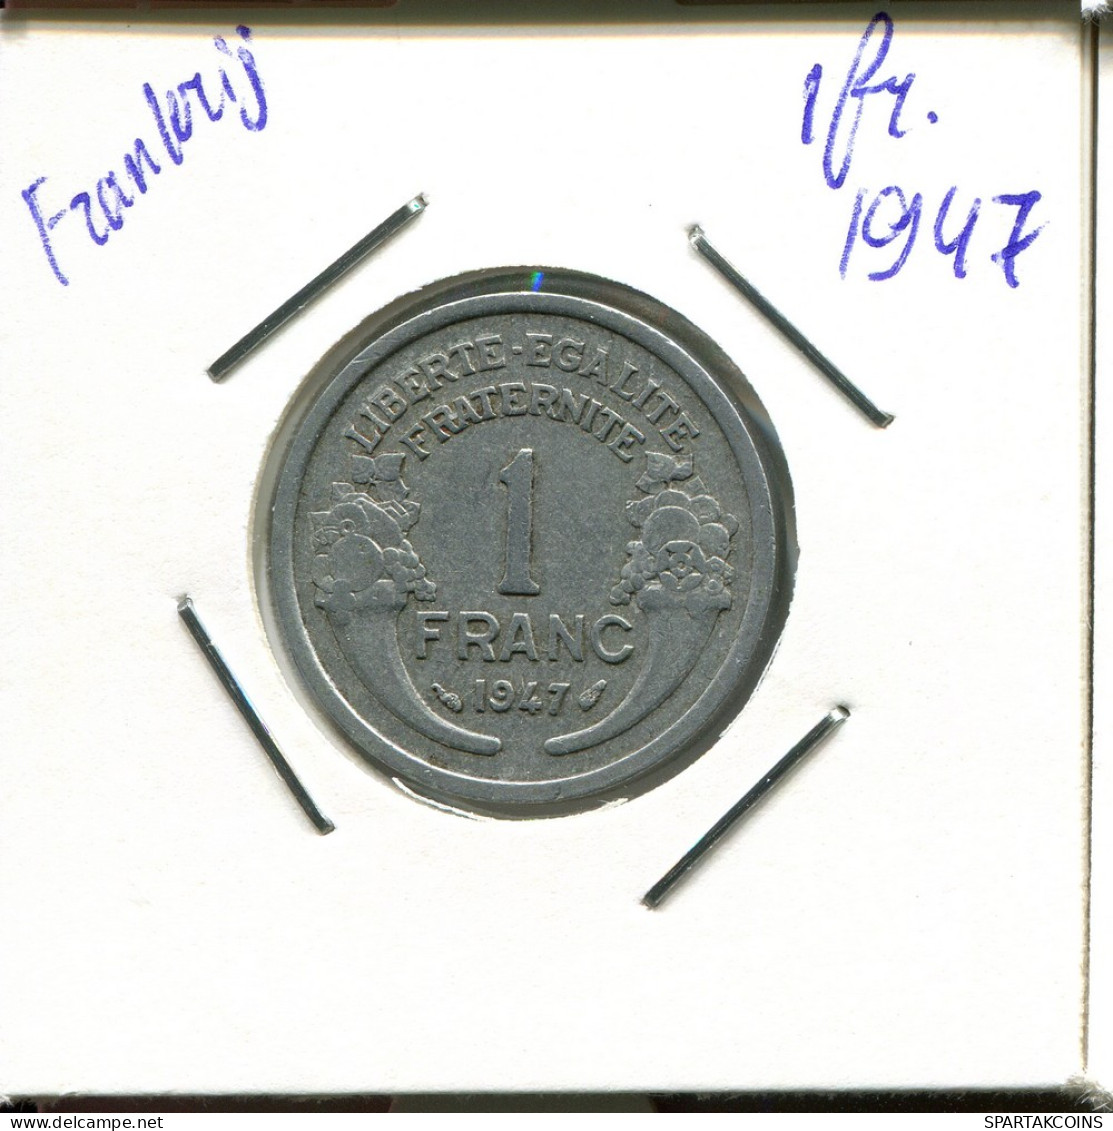 1 FRANC 1947 FRANCE Coin French Coin #AN943 - 1 Franc